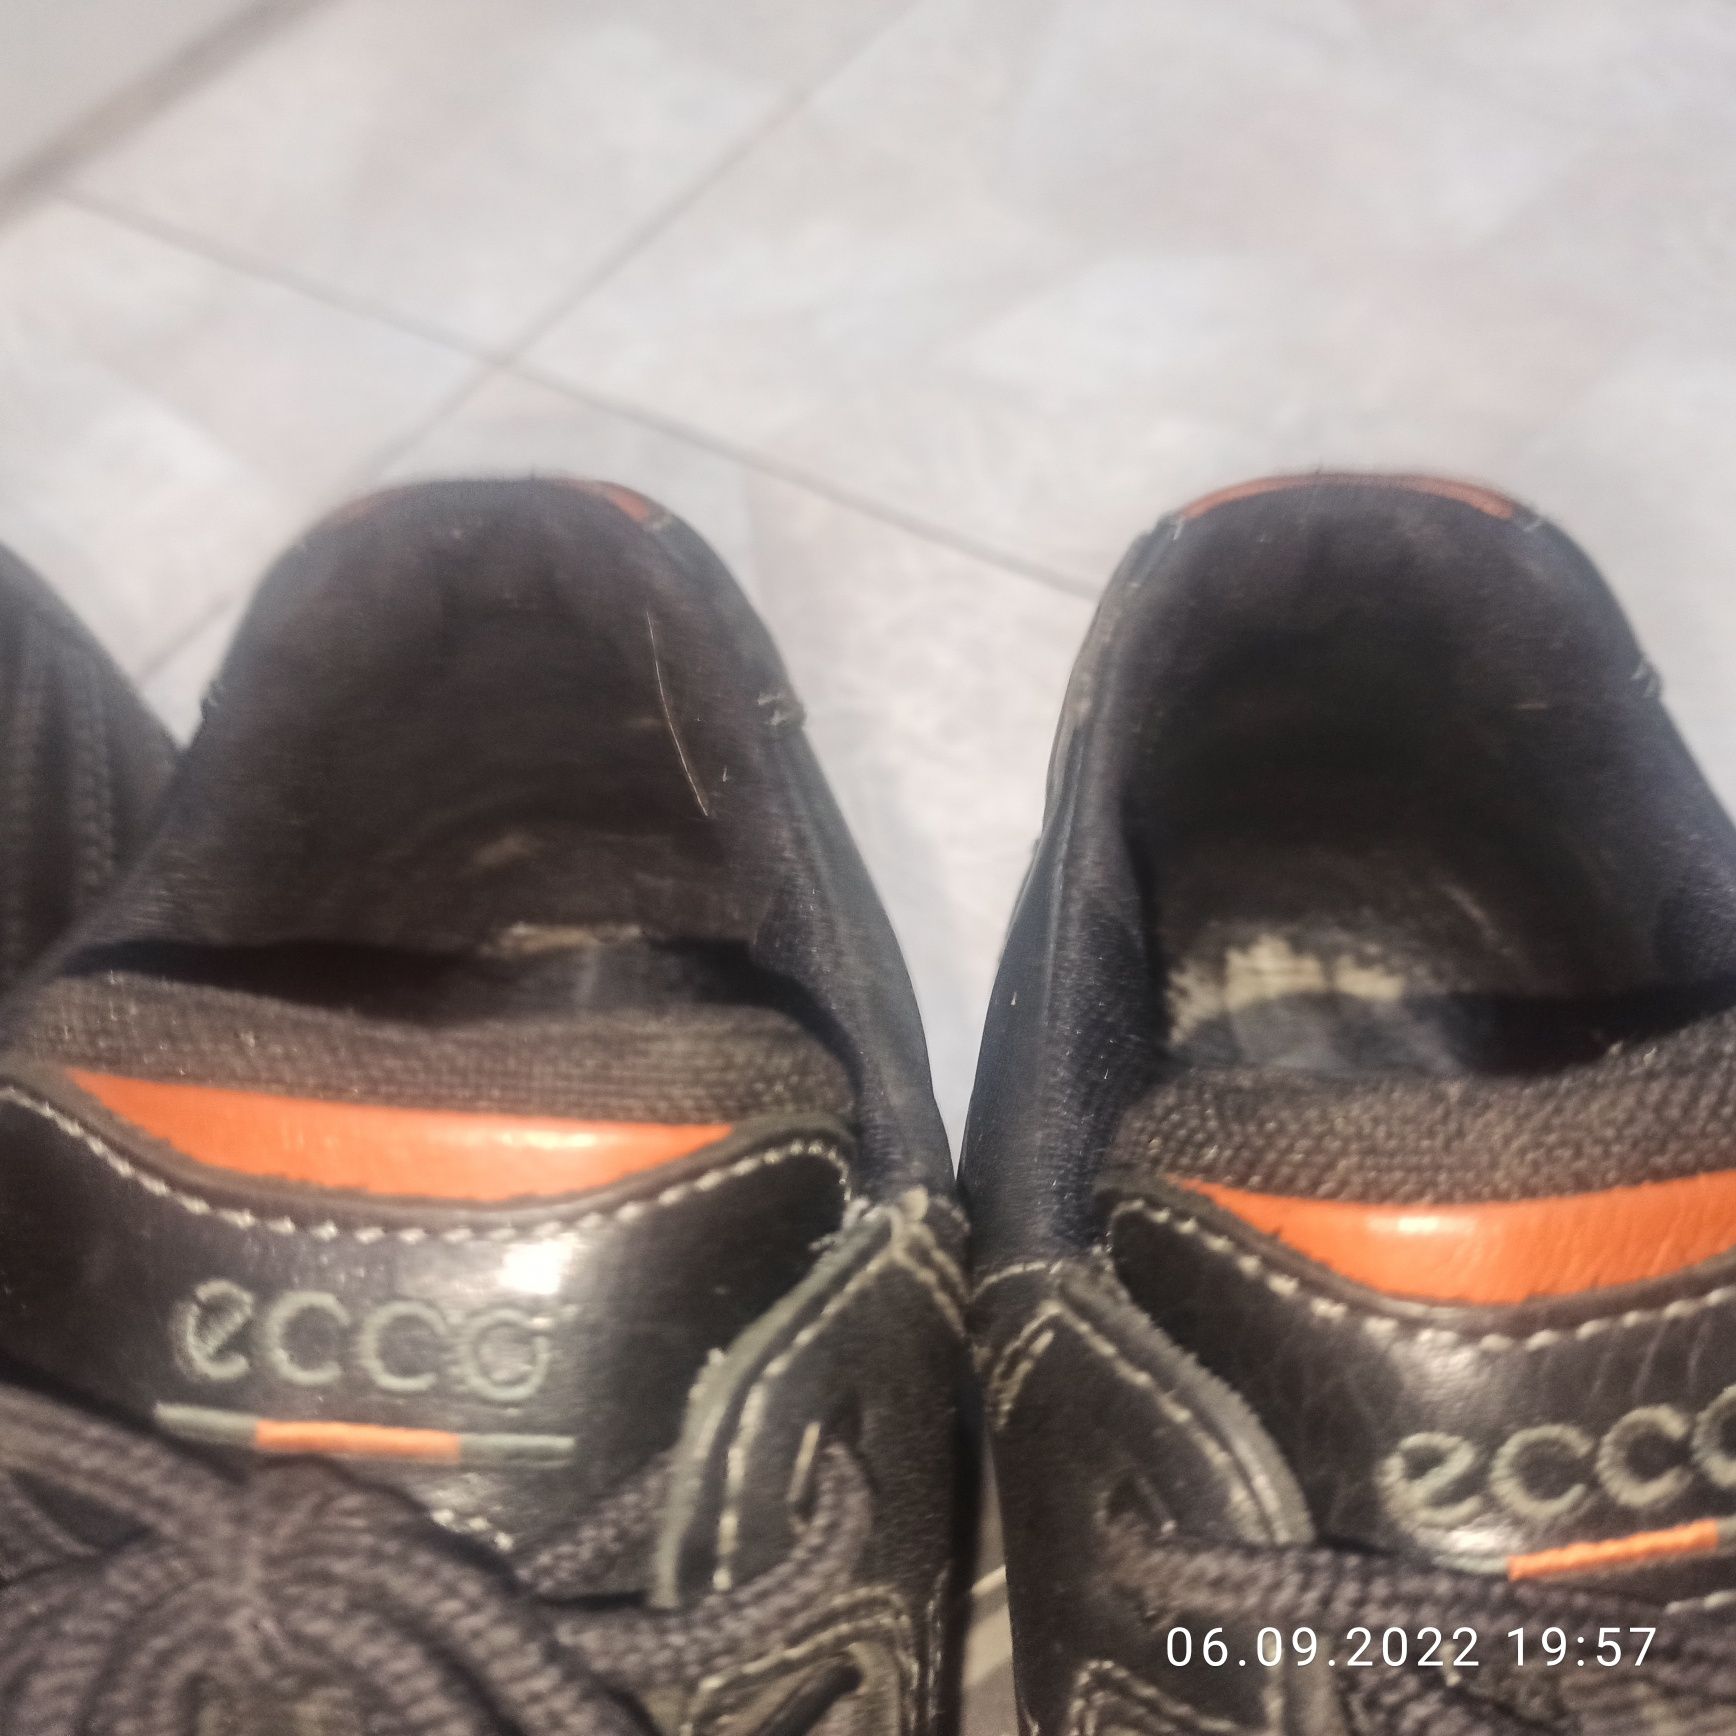 Обувь Ecco под ремонт